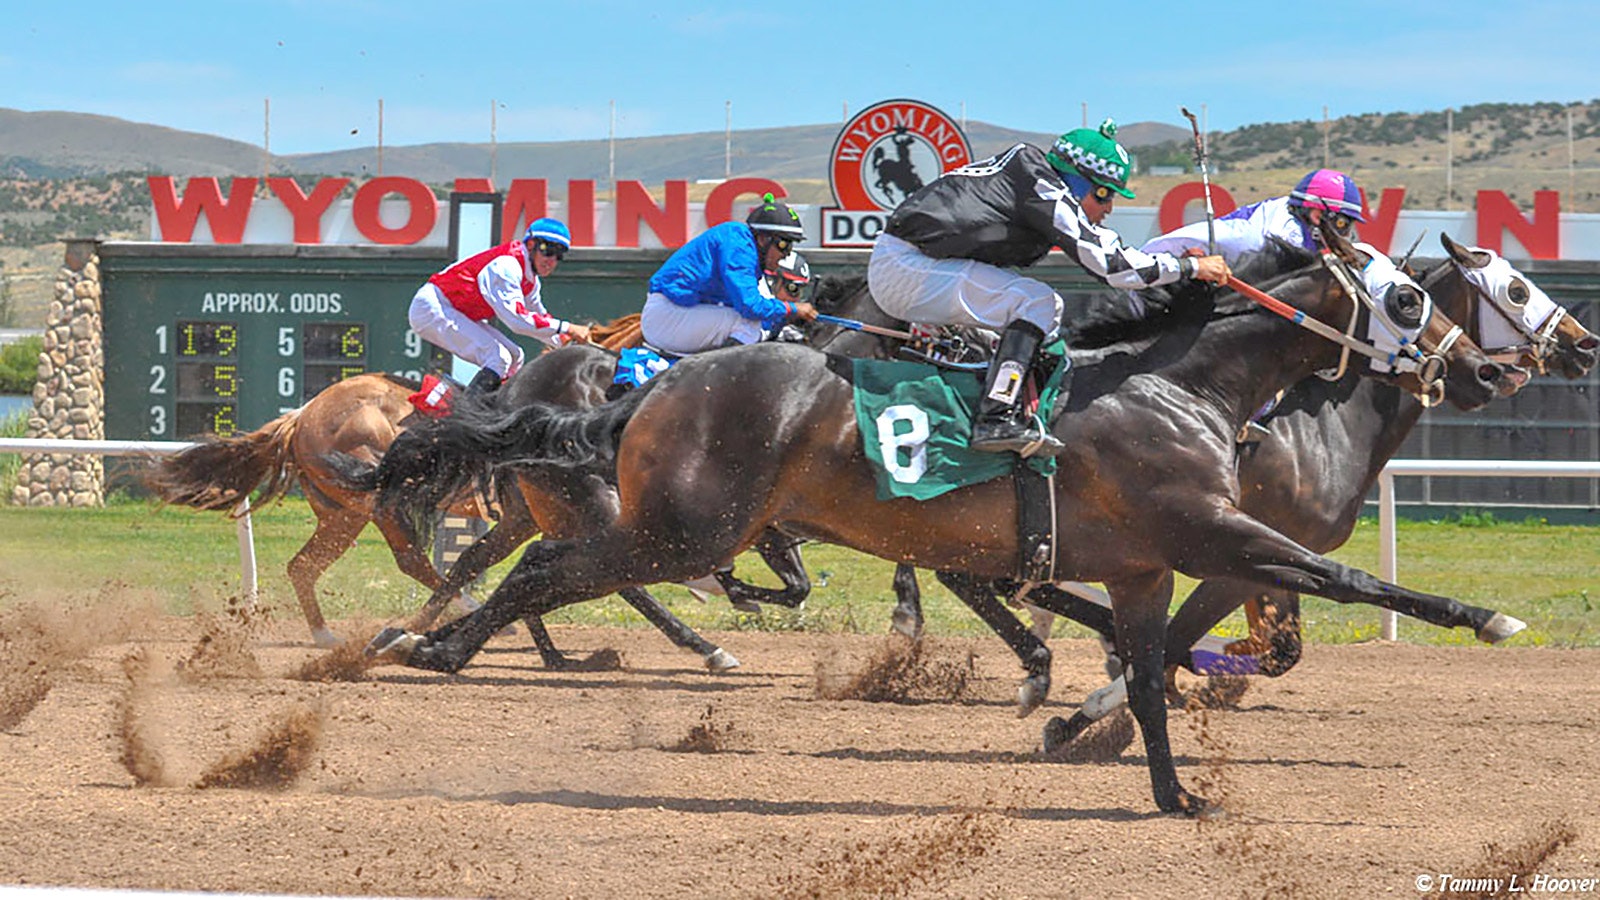 Wyoming Downs horse racing 6 23 23